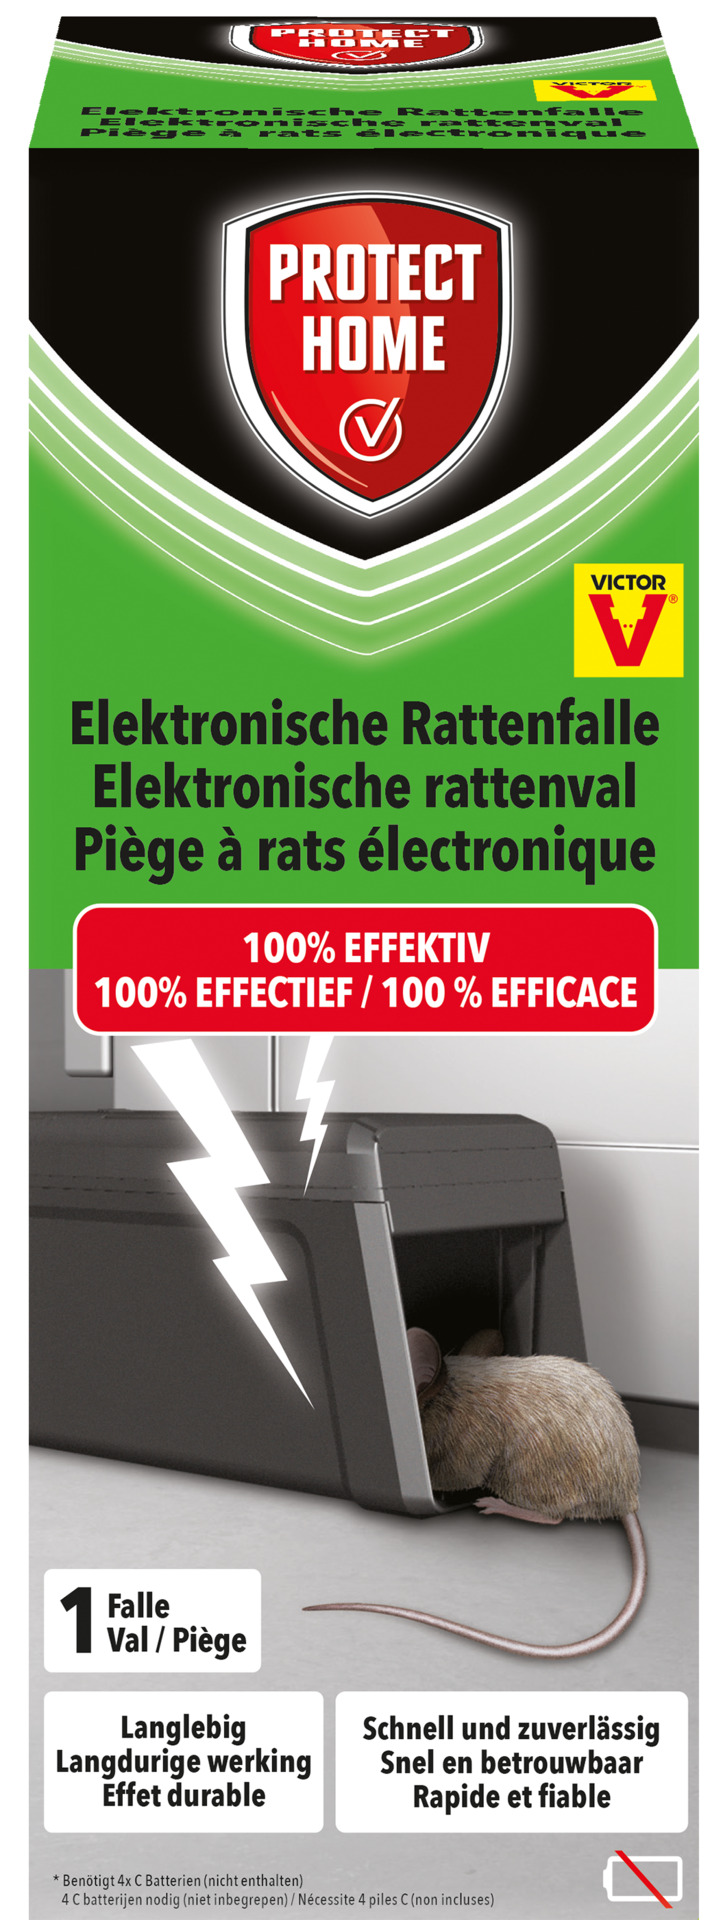 Elektronische Rattenfalle